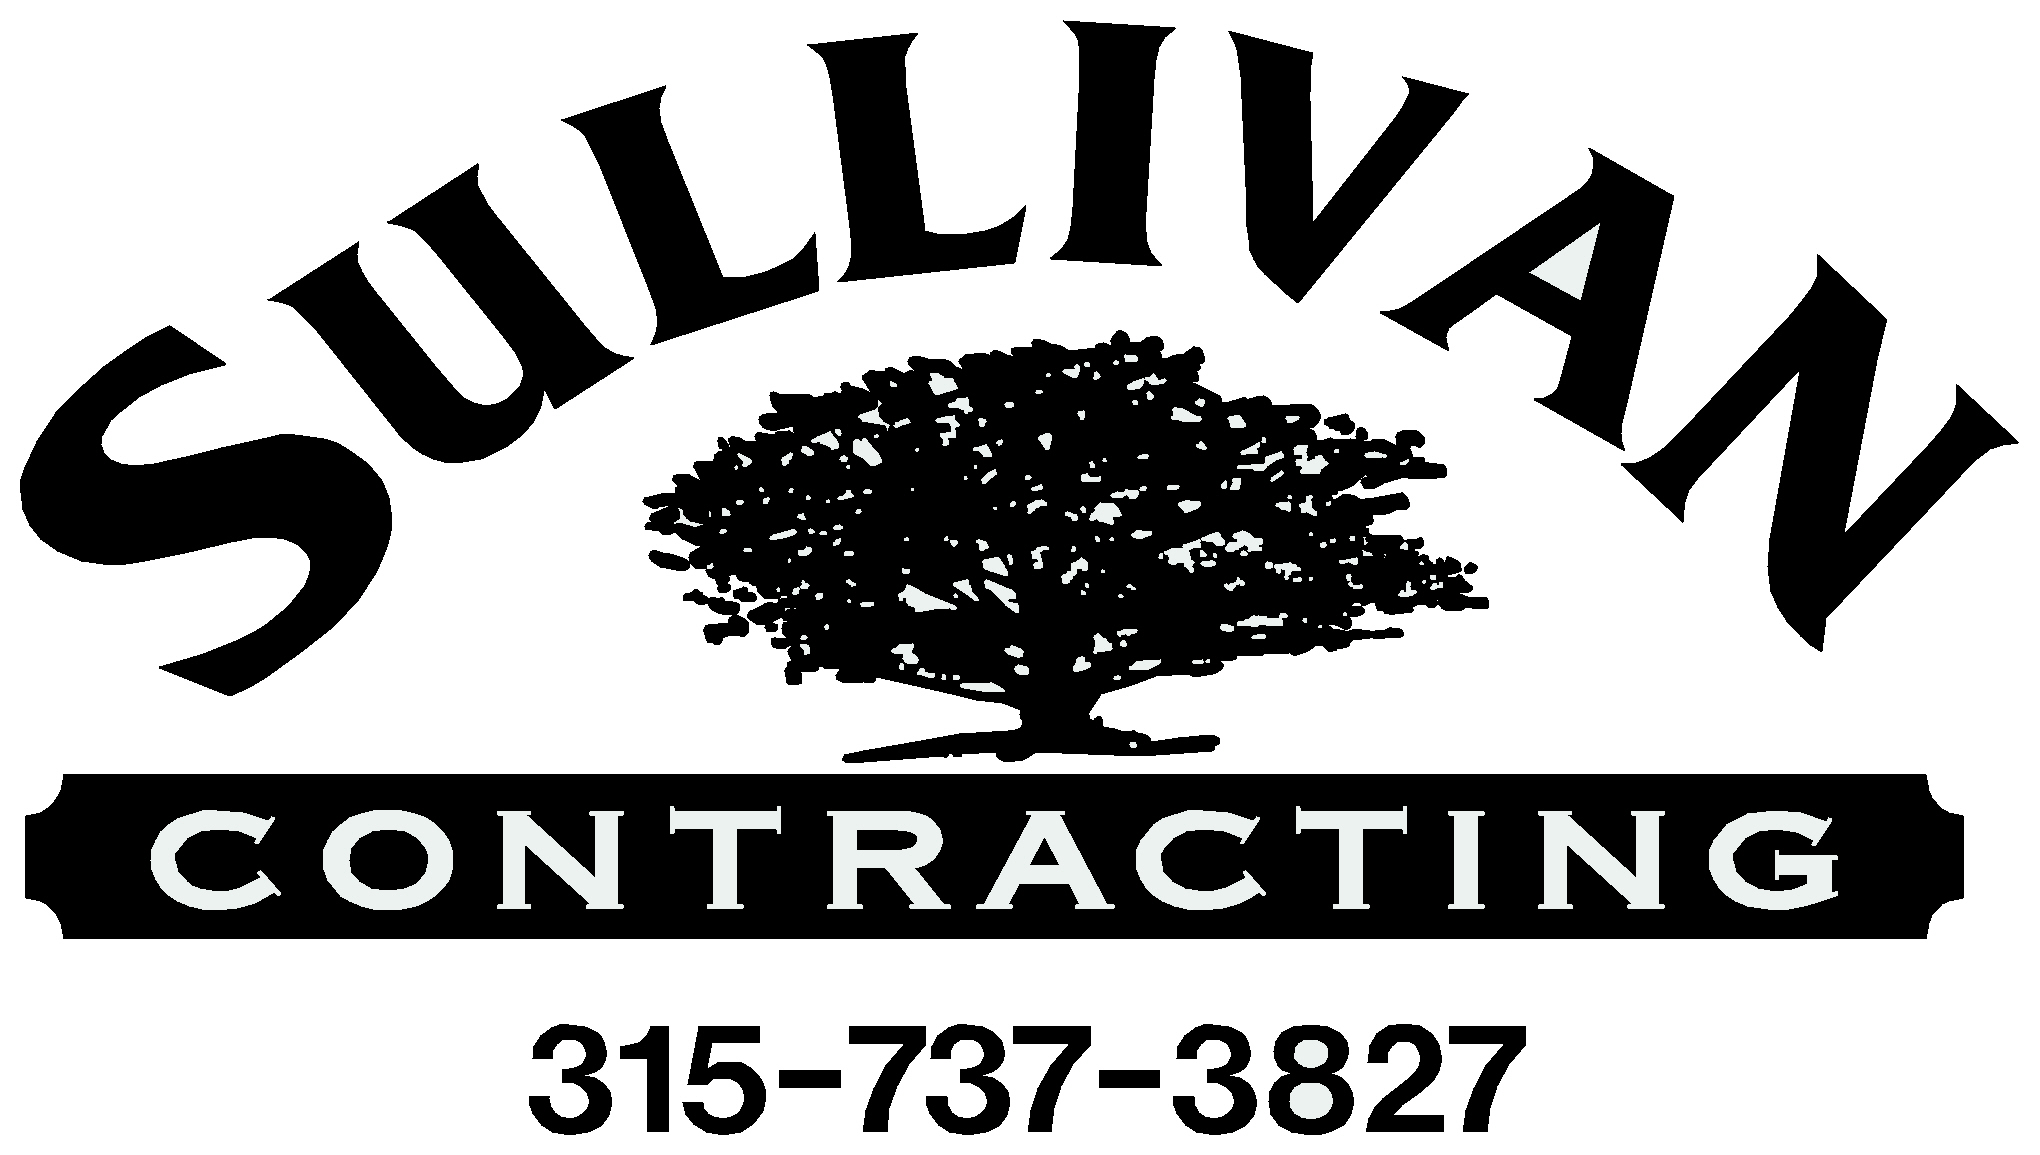 Sullivan Contracting